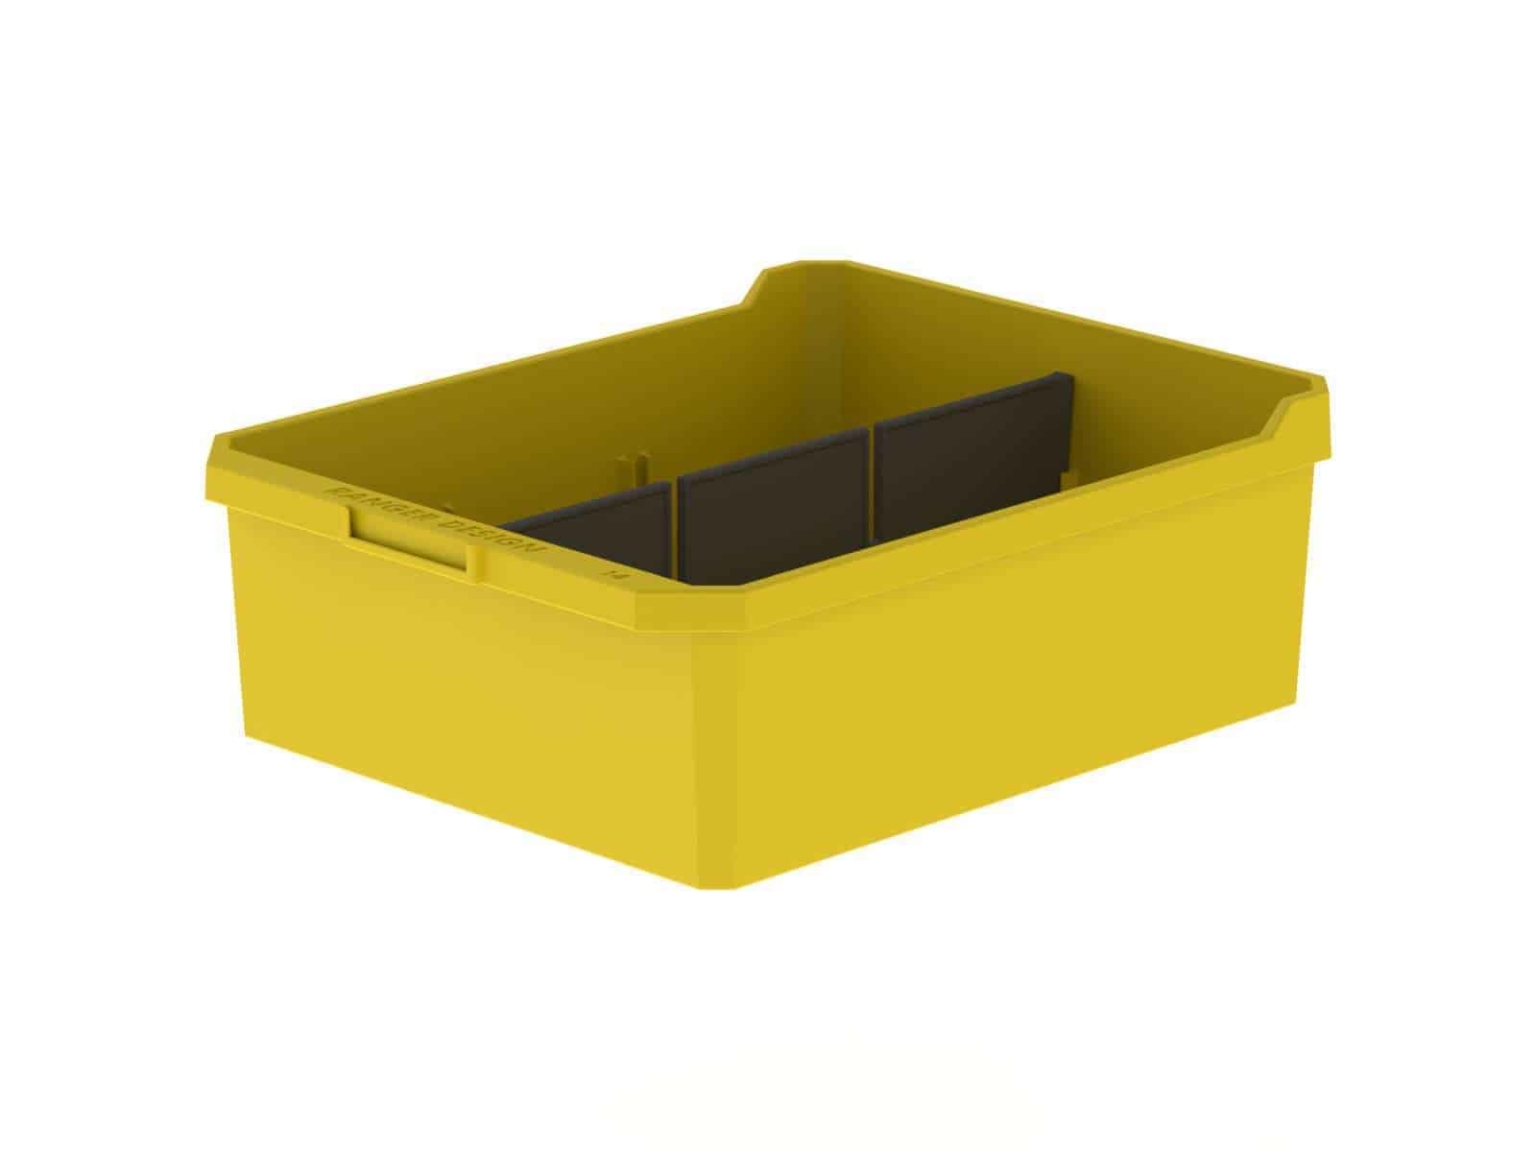 Shelf bin with center divider